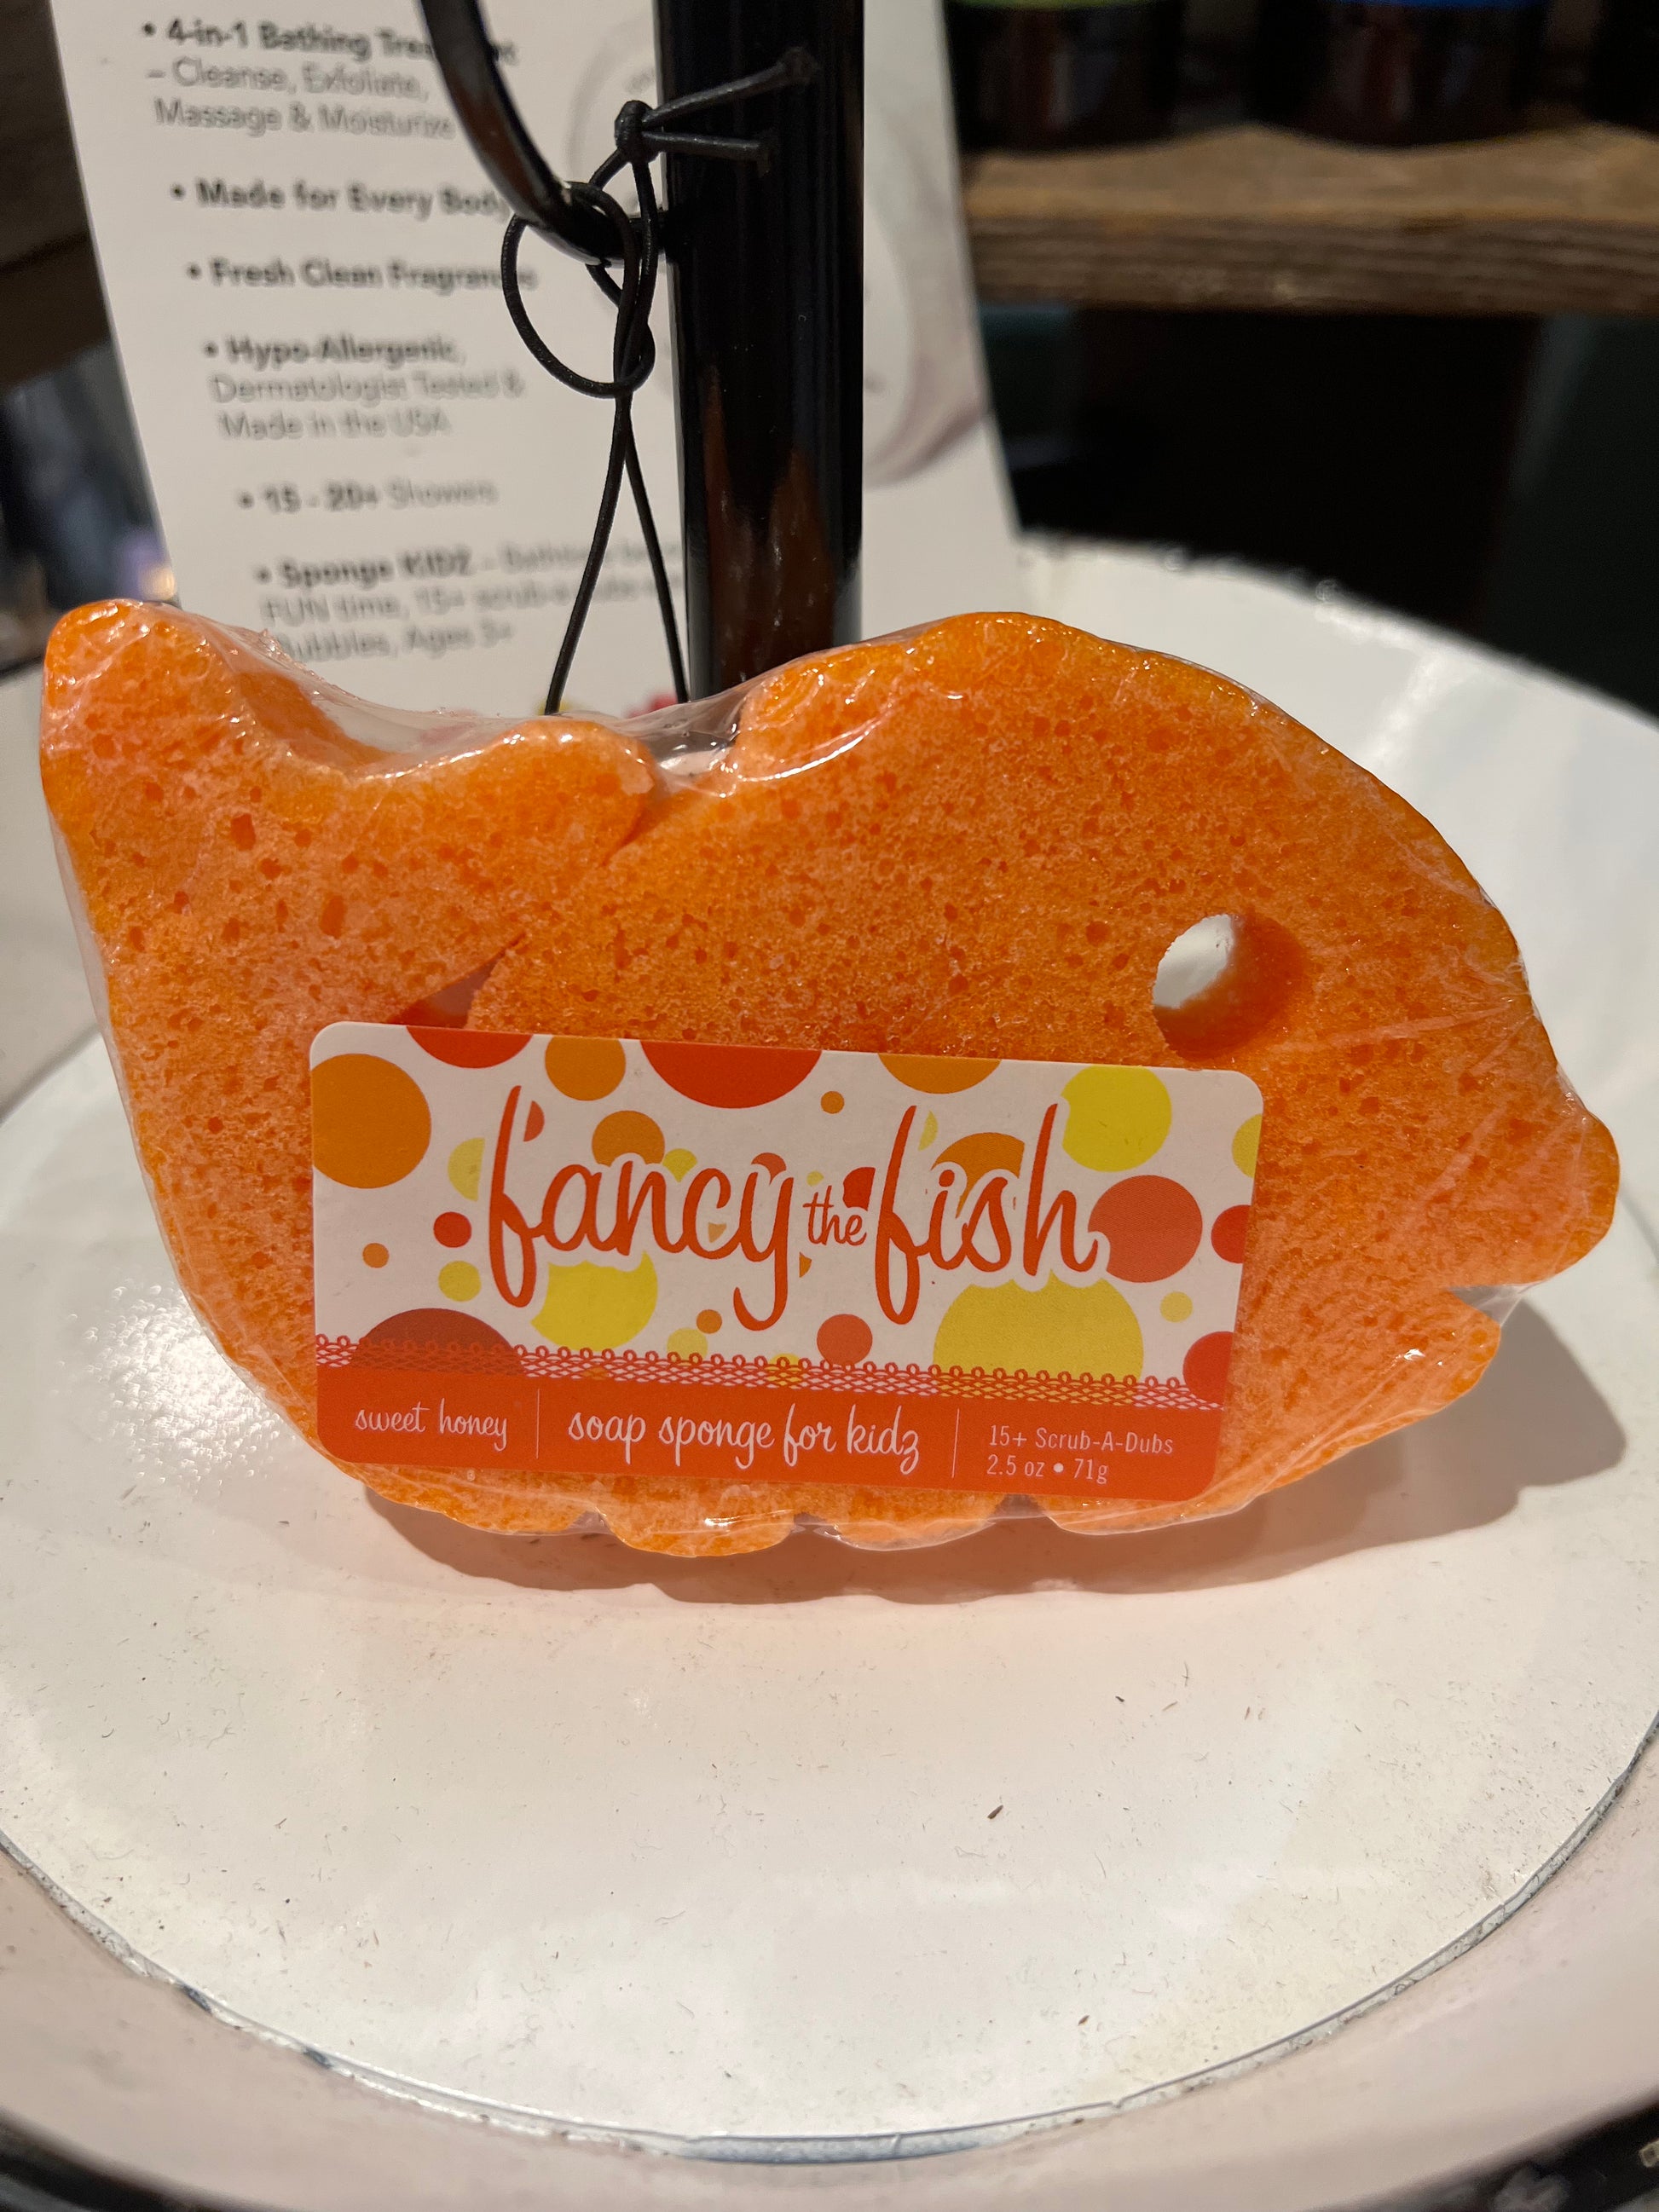 Caren "Fancy the Fish" soap sponge for kids shaped like an orange fish.